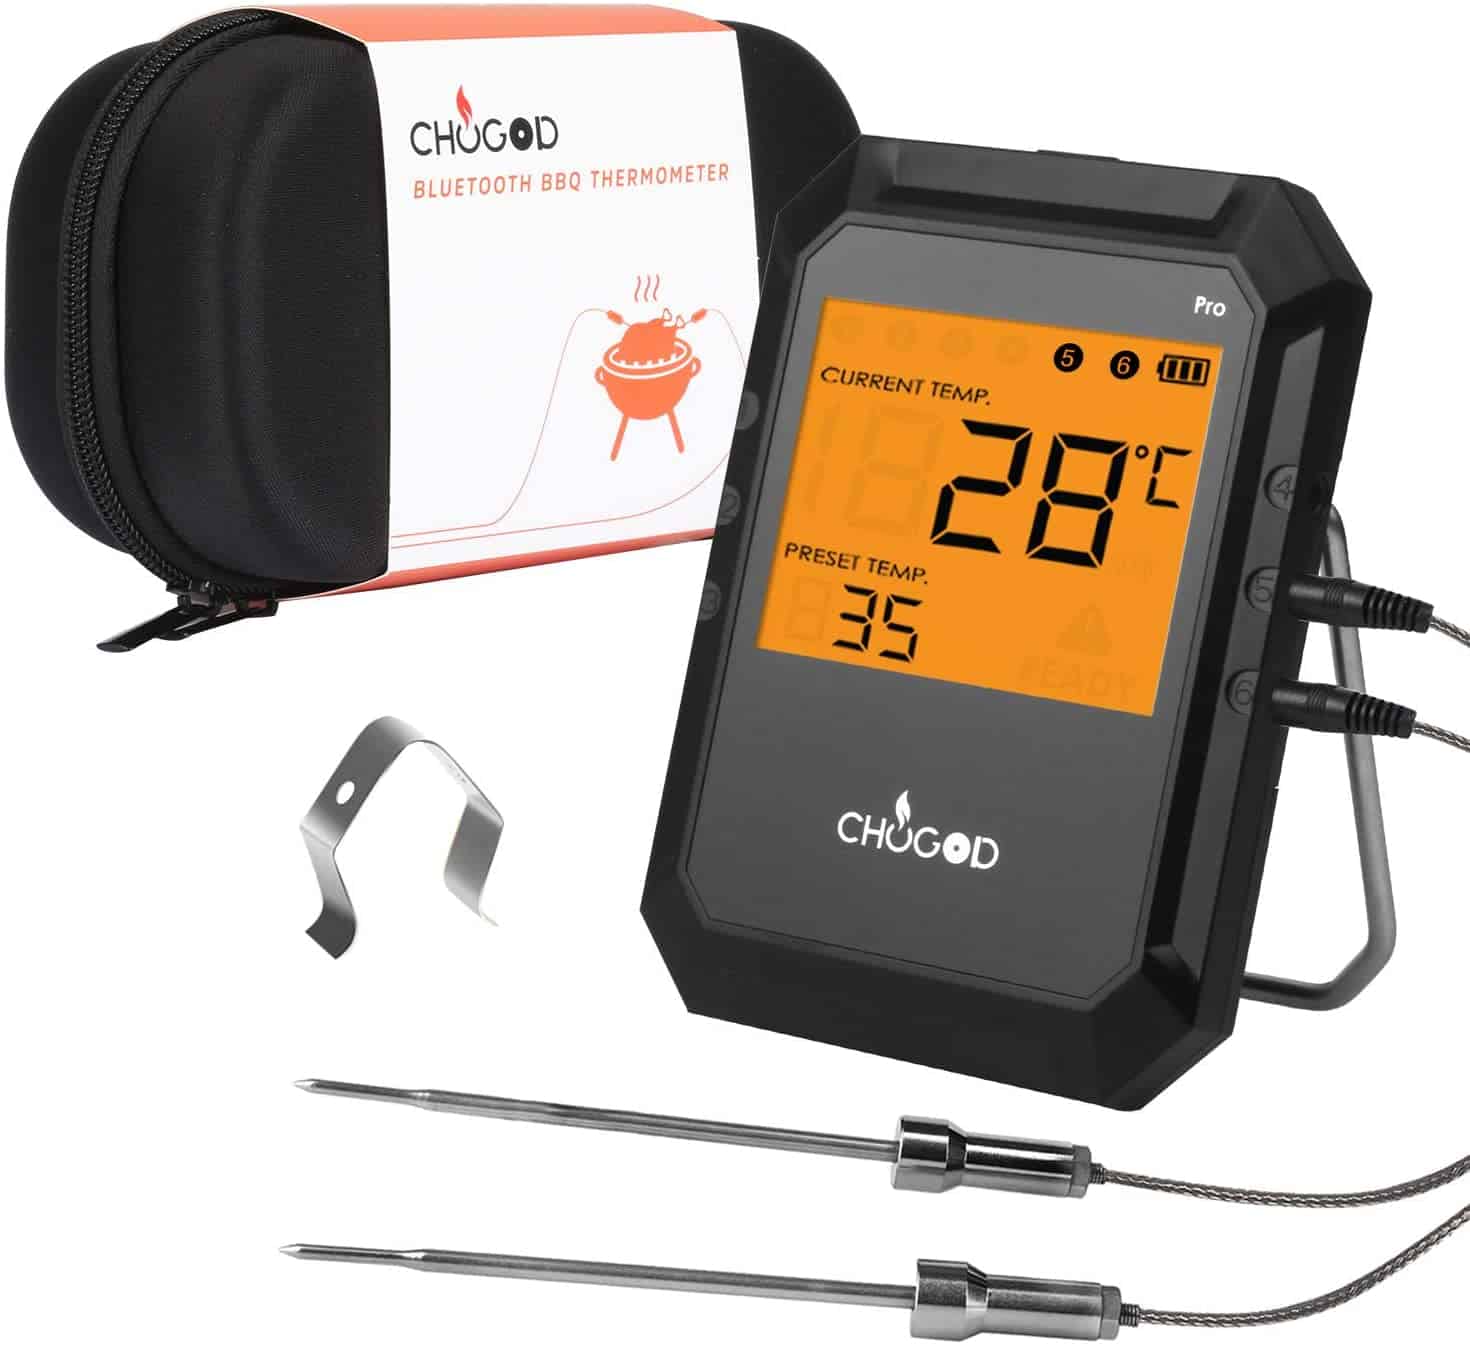 Best Bluetooth Barbecue Smoker Thermometer: Uvistare Digital